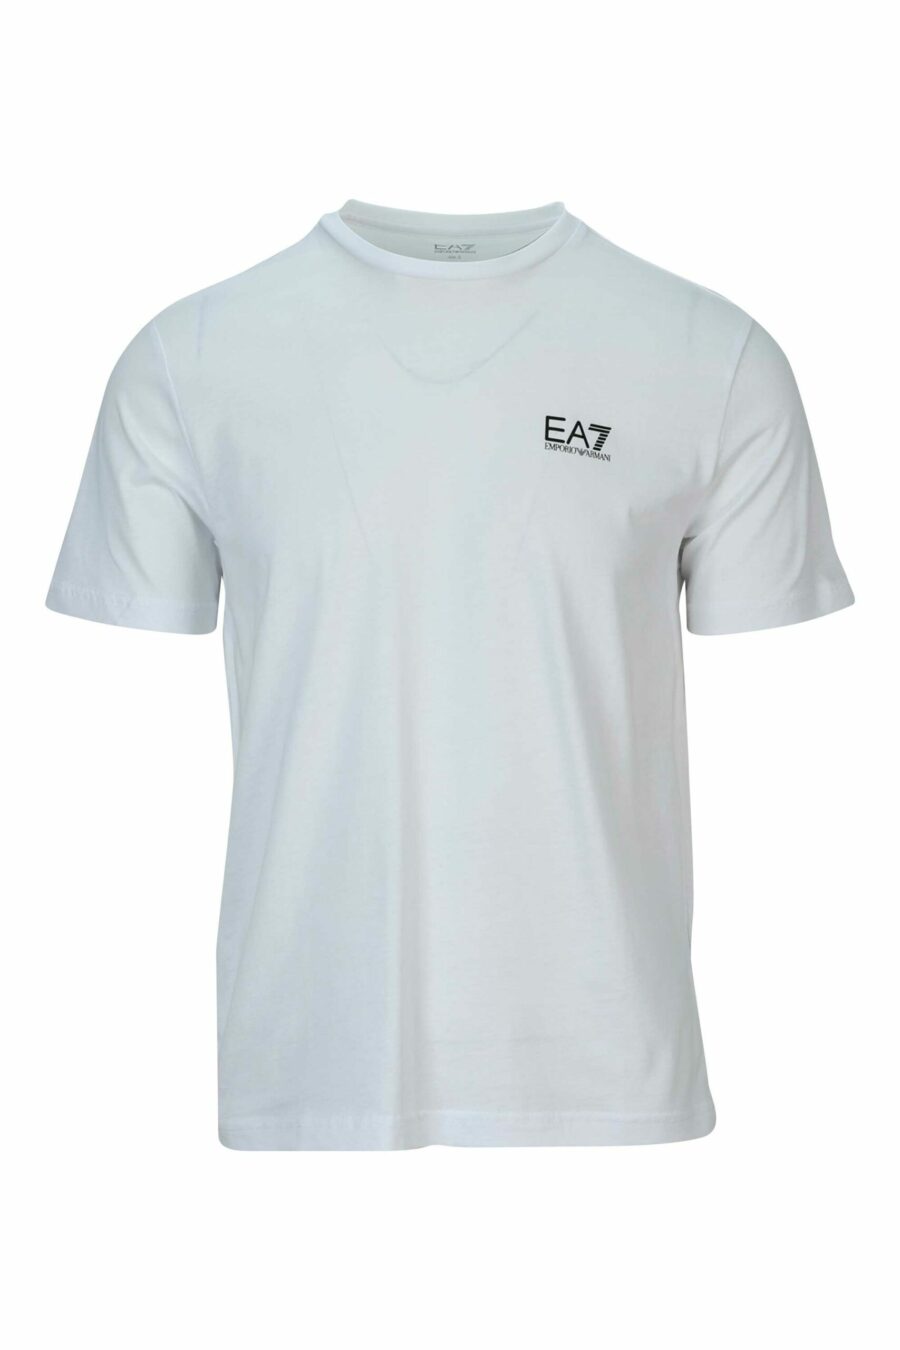 T-shirt blanc avec maxilogo vertical "lux identity" au dos - 8058947452569 scaled